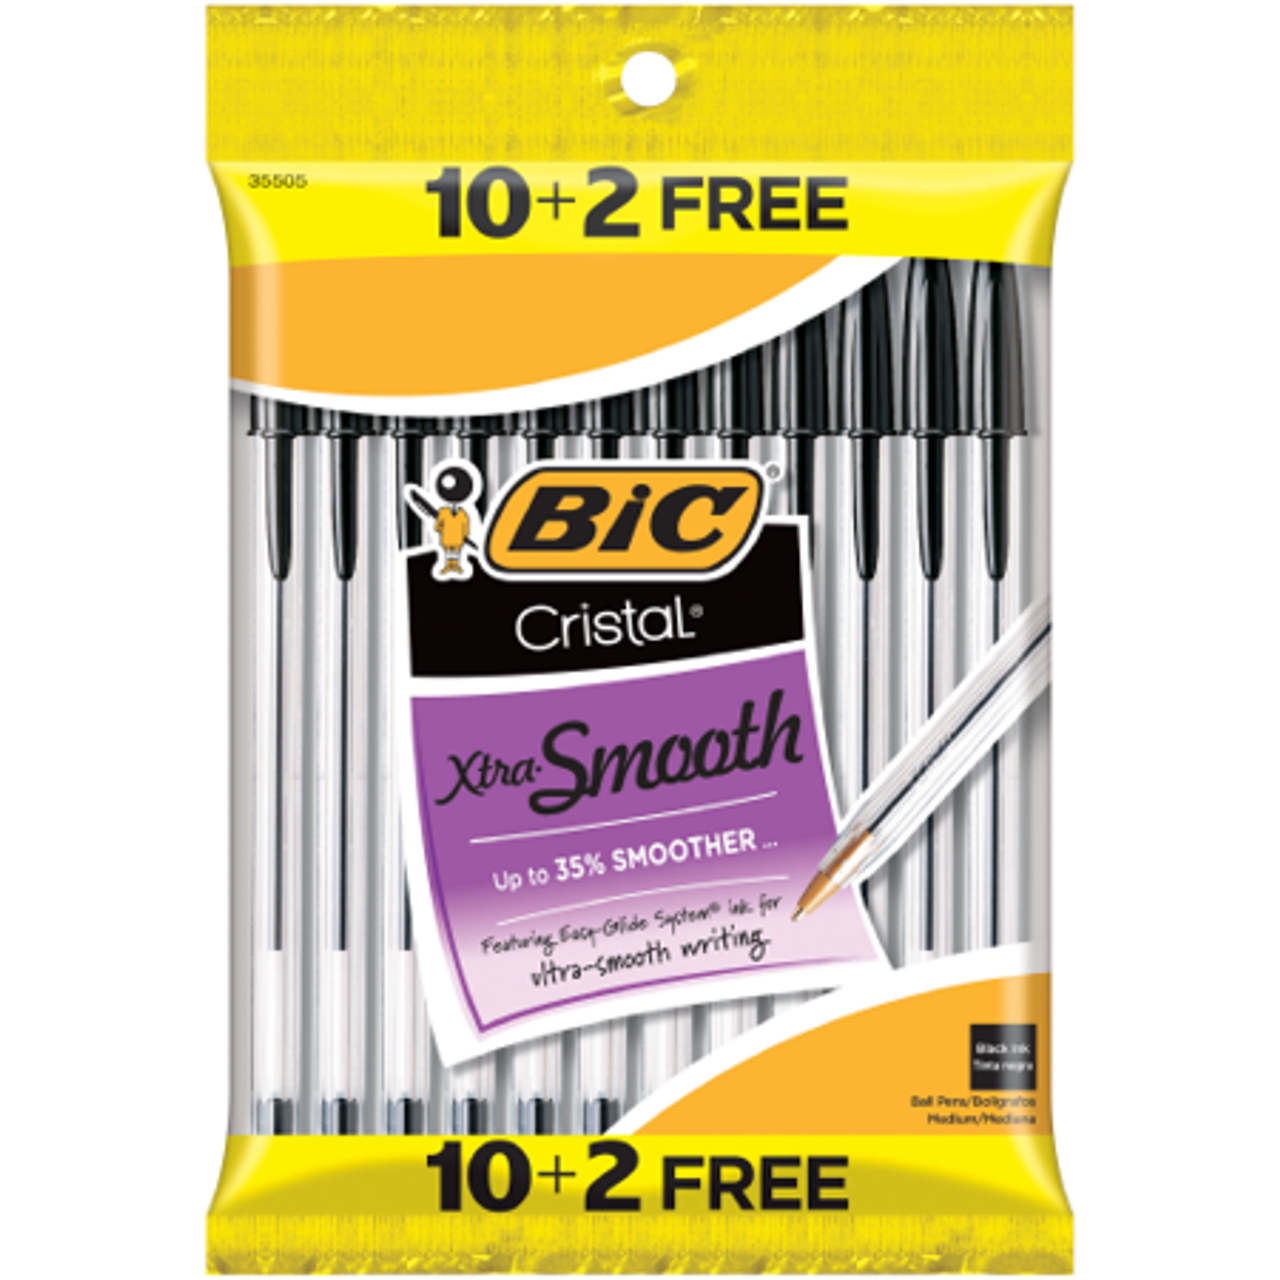 BIC Bic Cristal Xtra Bold 8 Color Pen Pk